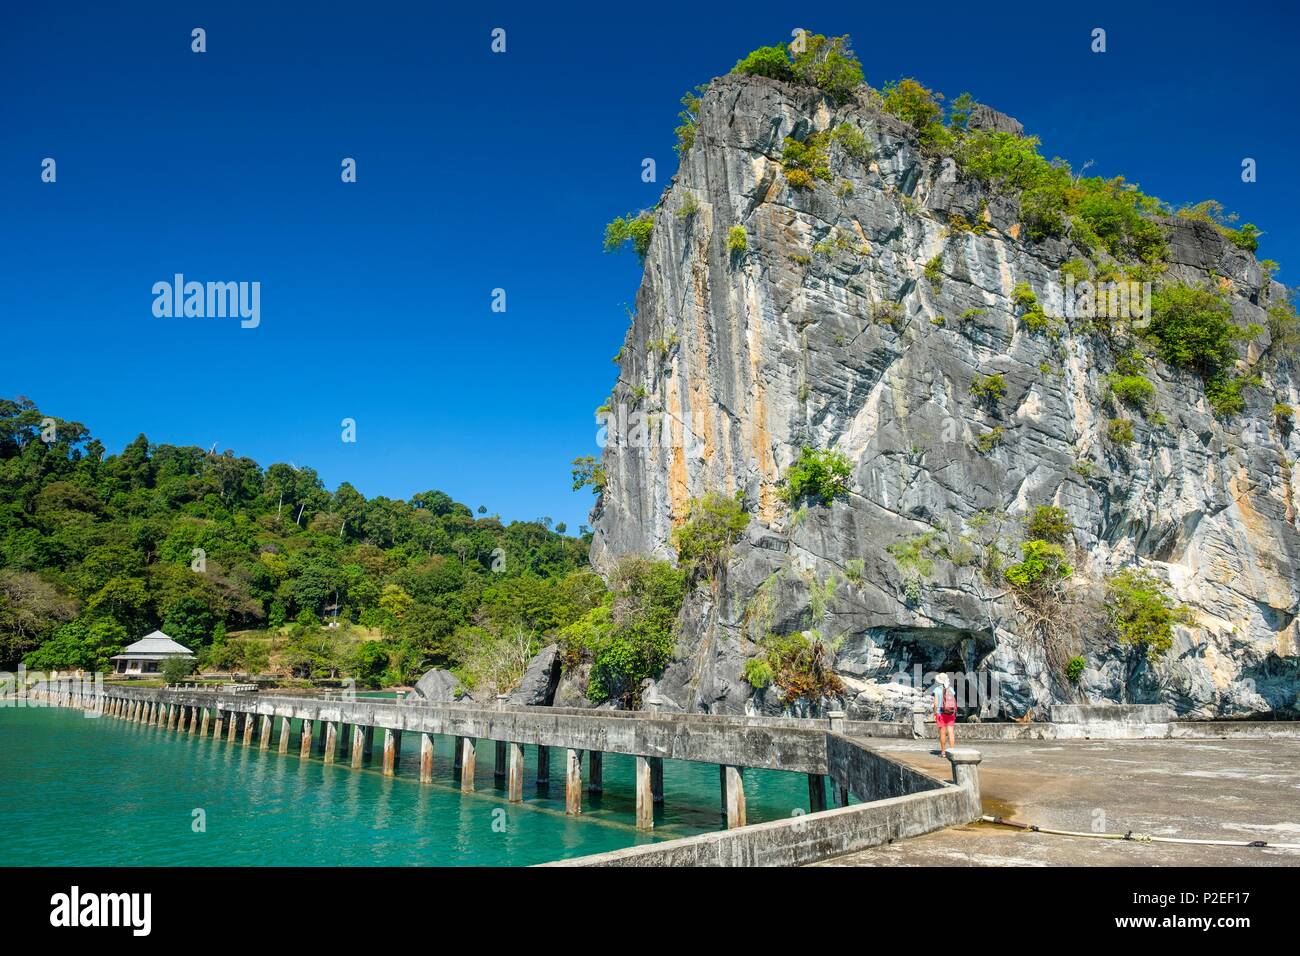 Thailand, Satun province, Tarutao National Marine Park, Ko Tarutao island, Ao Talo Wow, karst rock emerging from the ocean Stock Photo